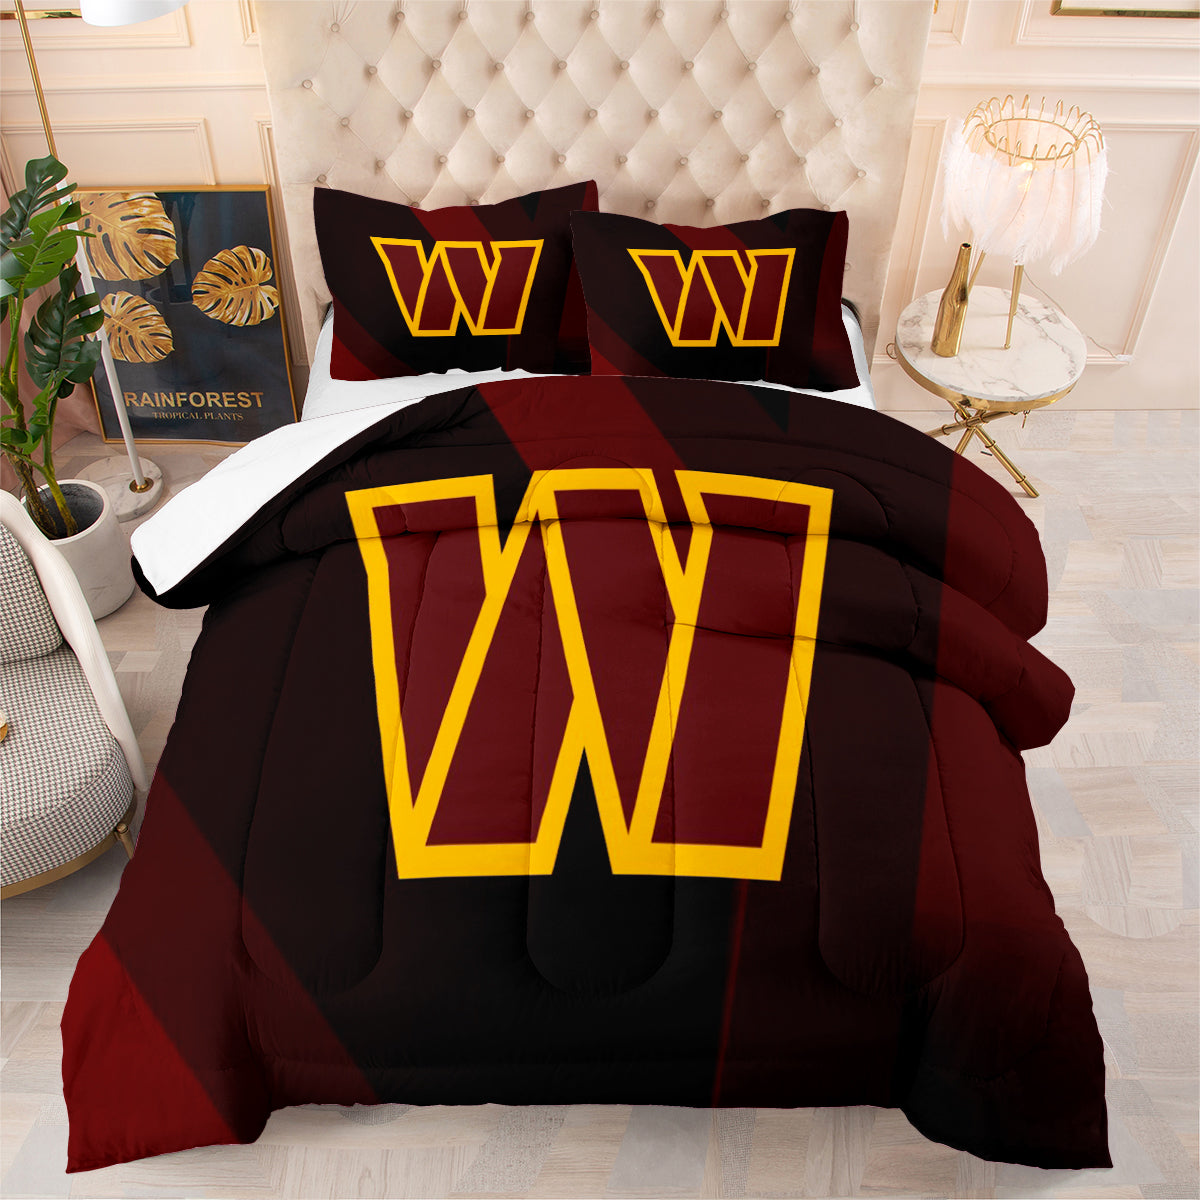 Washington Commanders Football Team Comforter Pillowcase Sets Blanket All Season Reversible Quilted Duvet